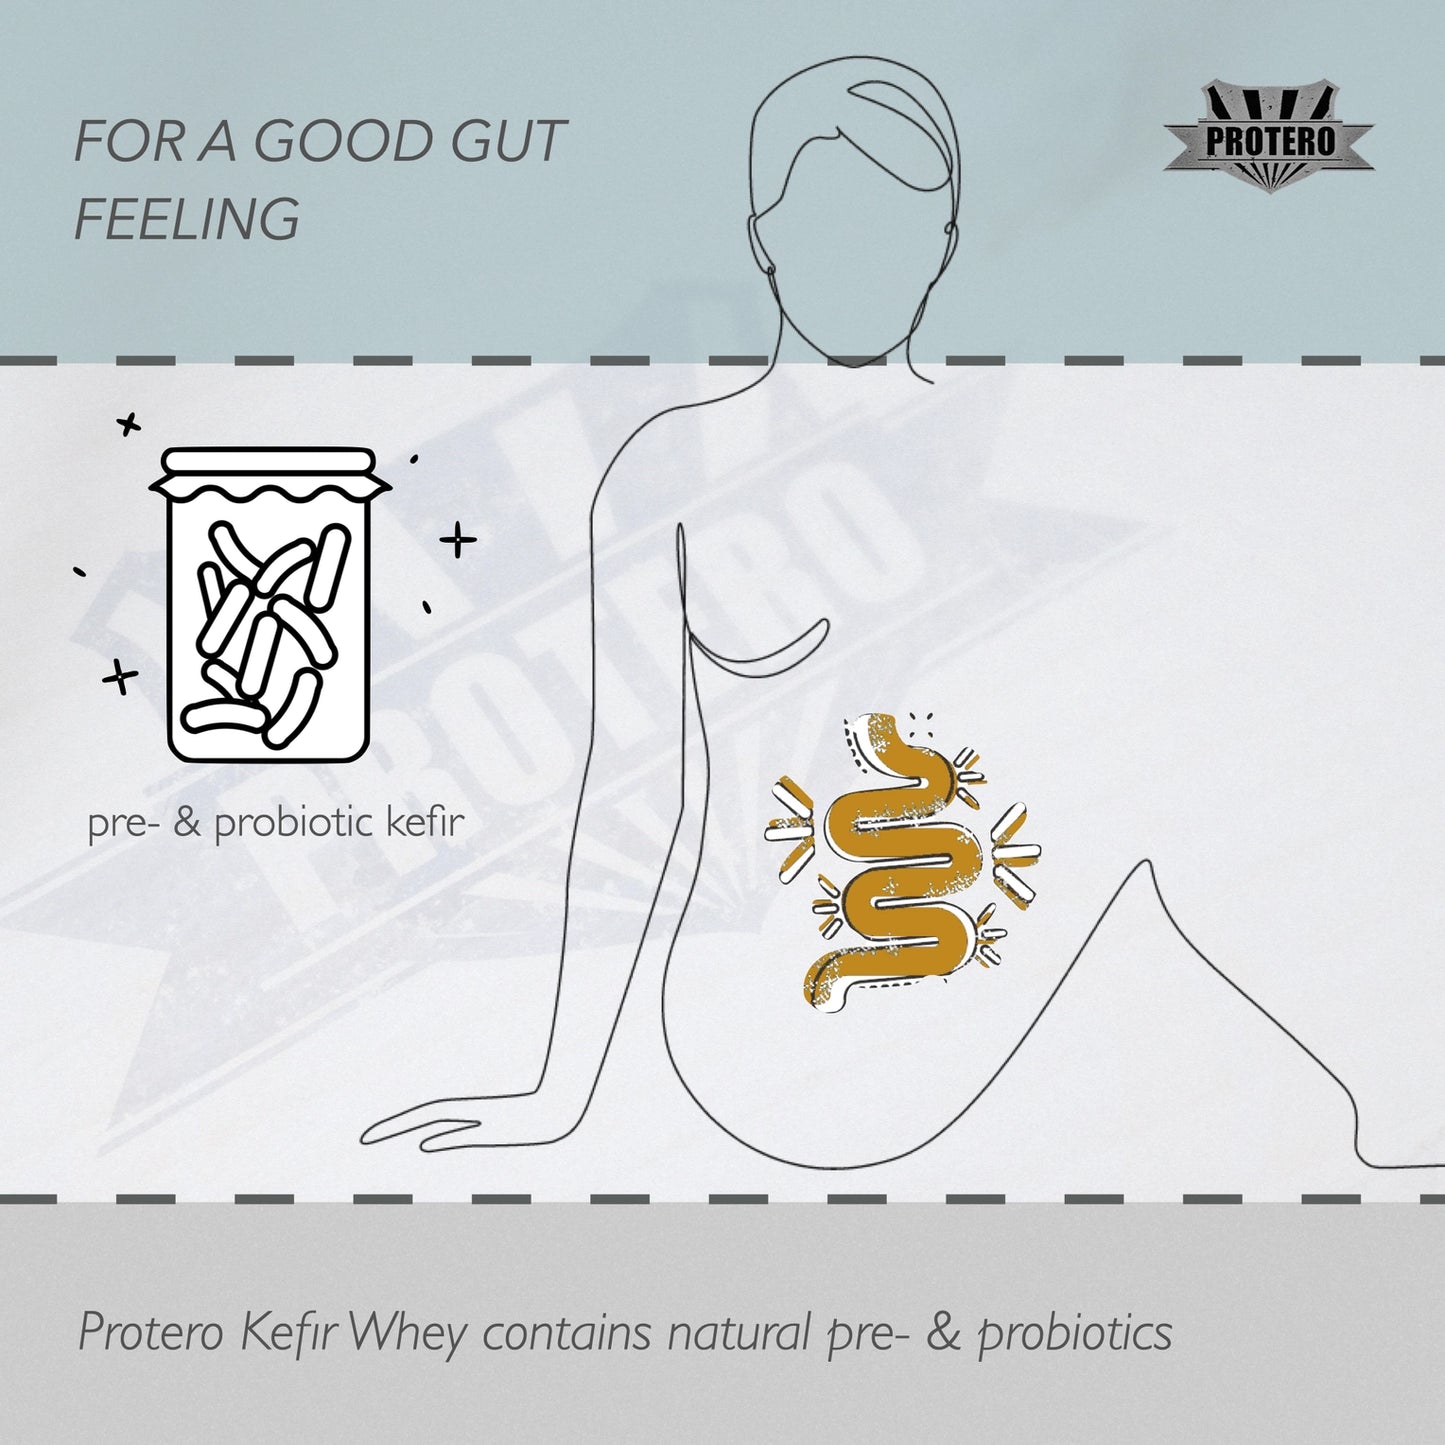 
                  
                    Kefir Whey Isolate  - Irish Grass-Fed - Microbiota (750g)
                  
                